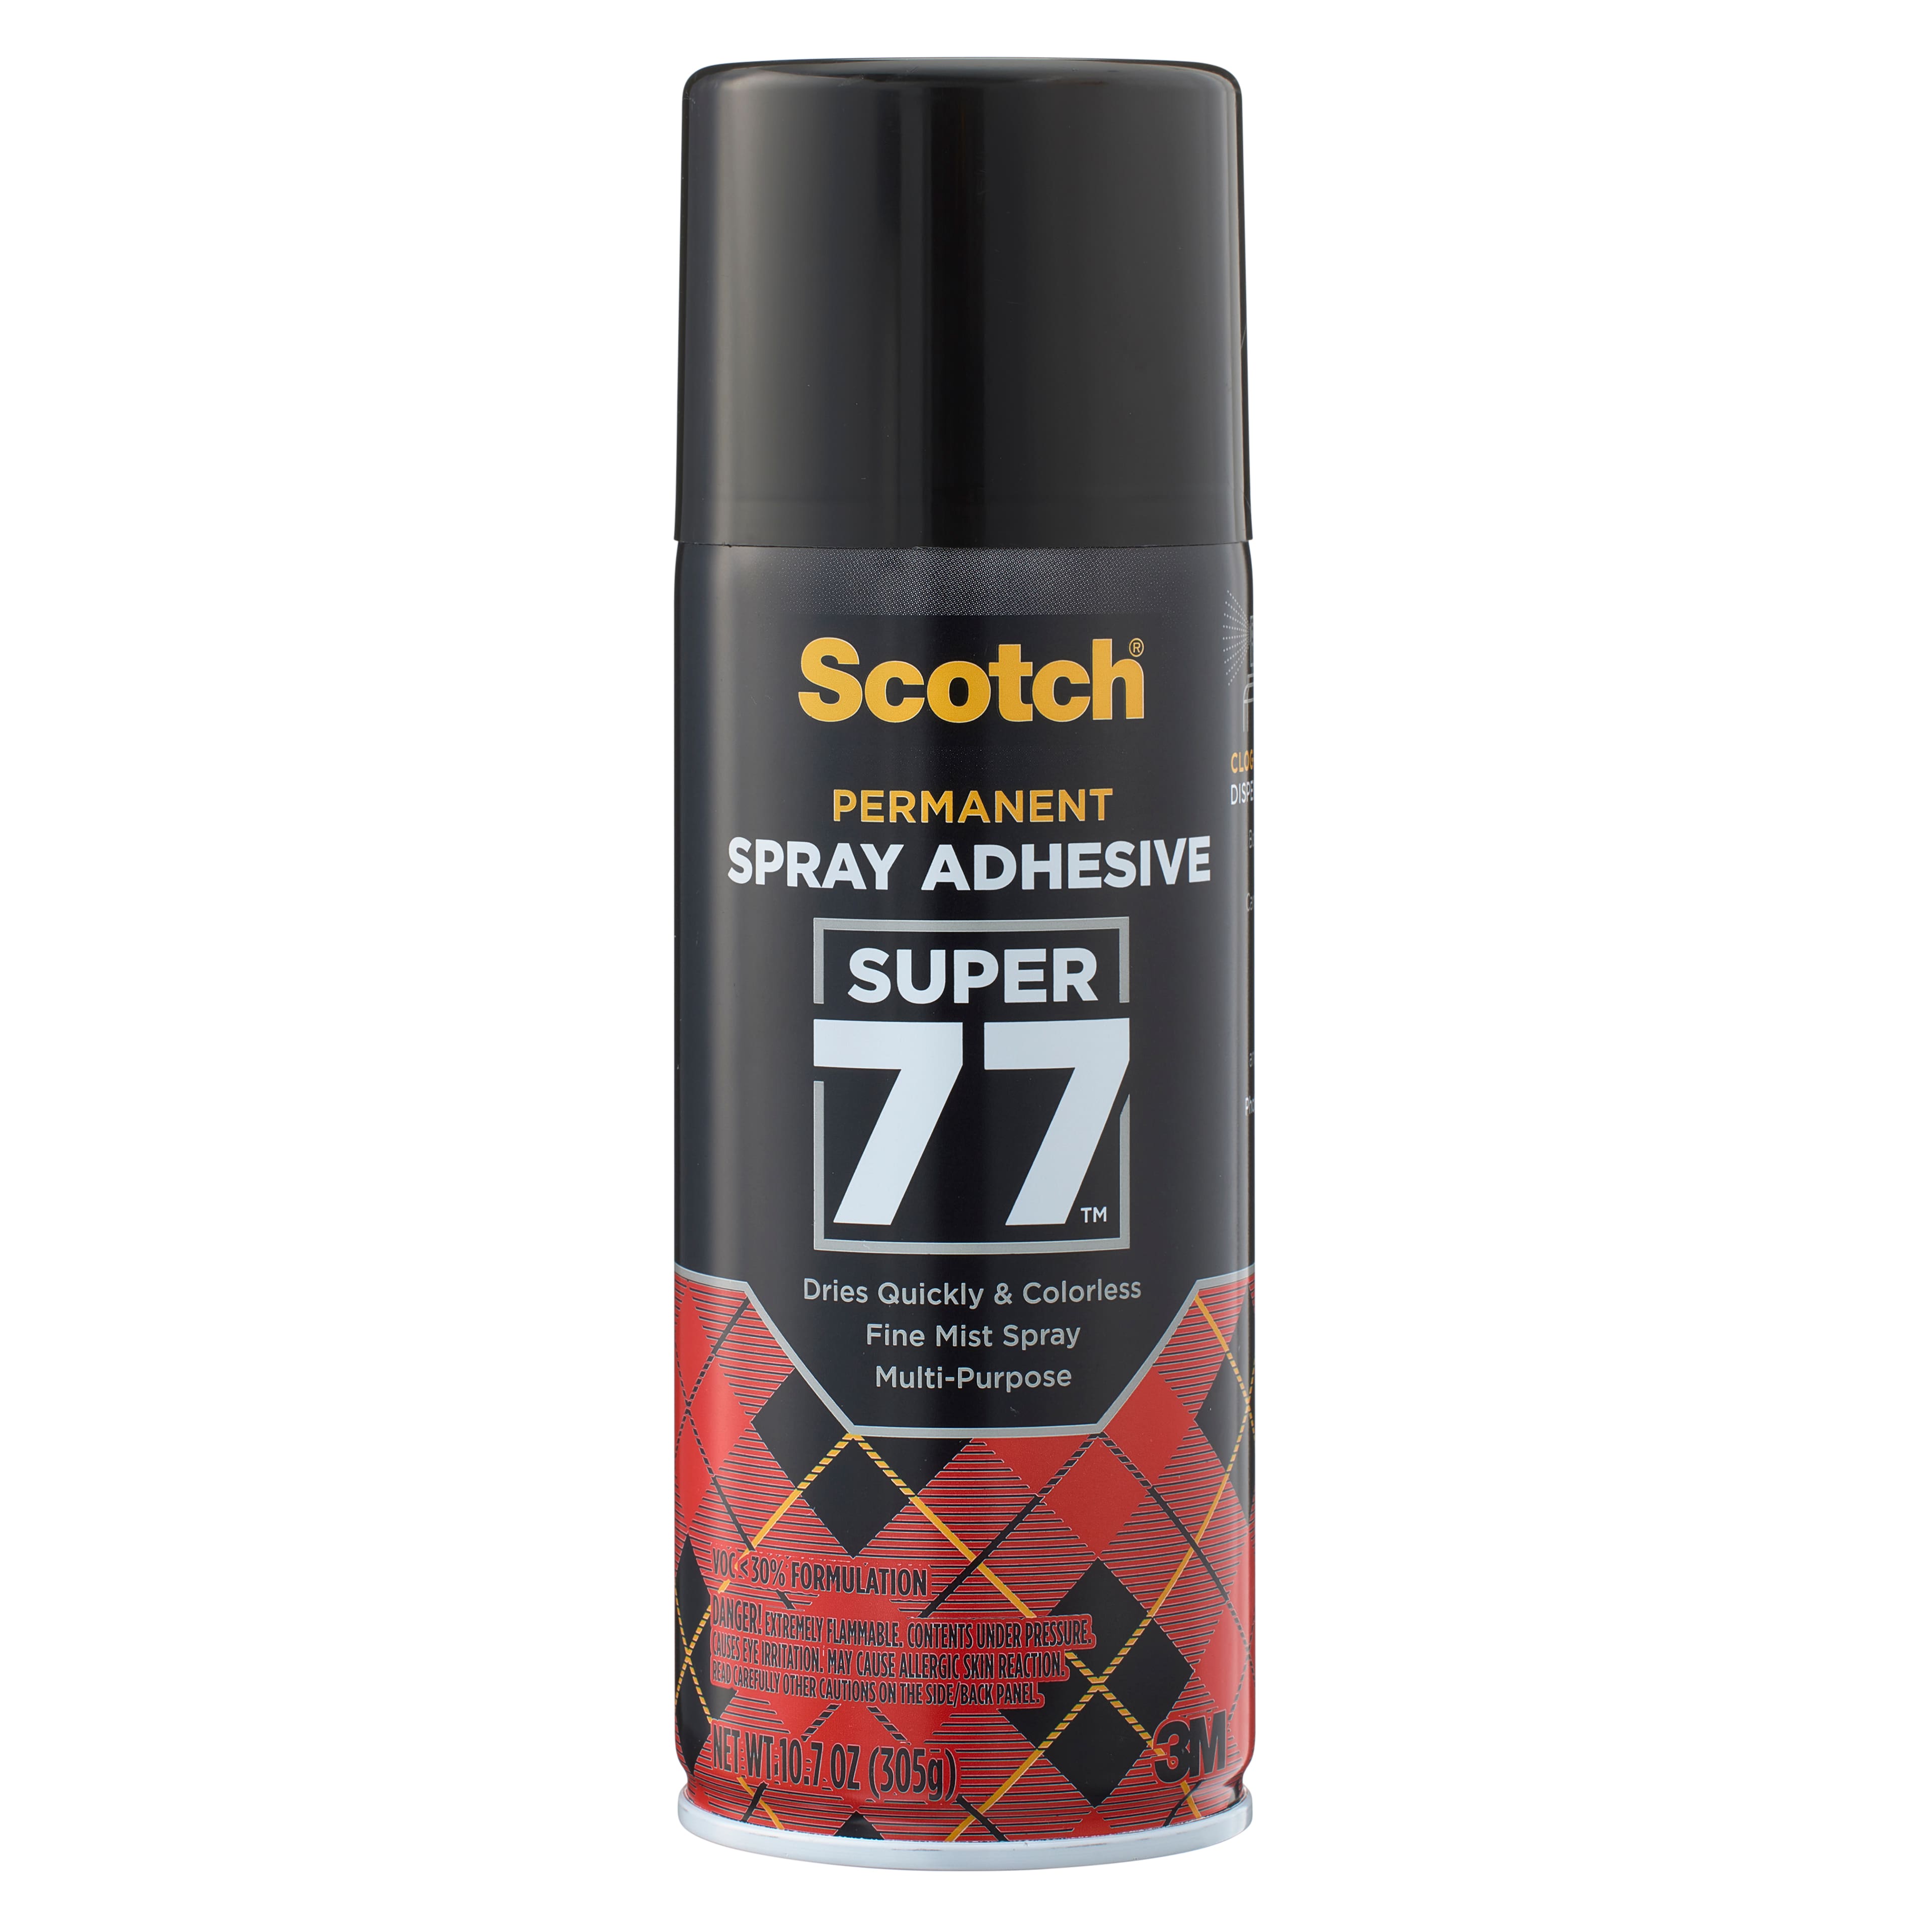 3M Scotch Super 77 Multi-Purpose Adhesive Spray 10.7oz